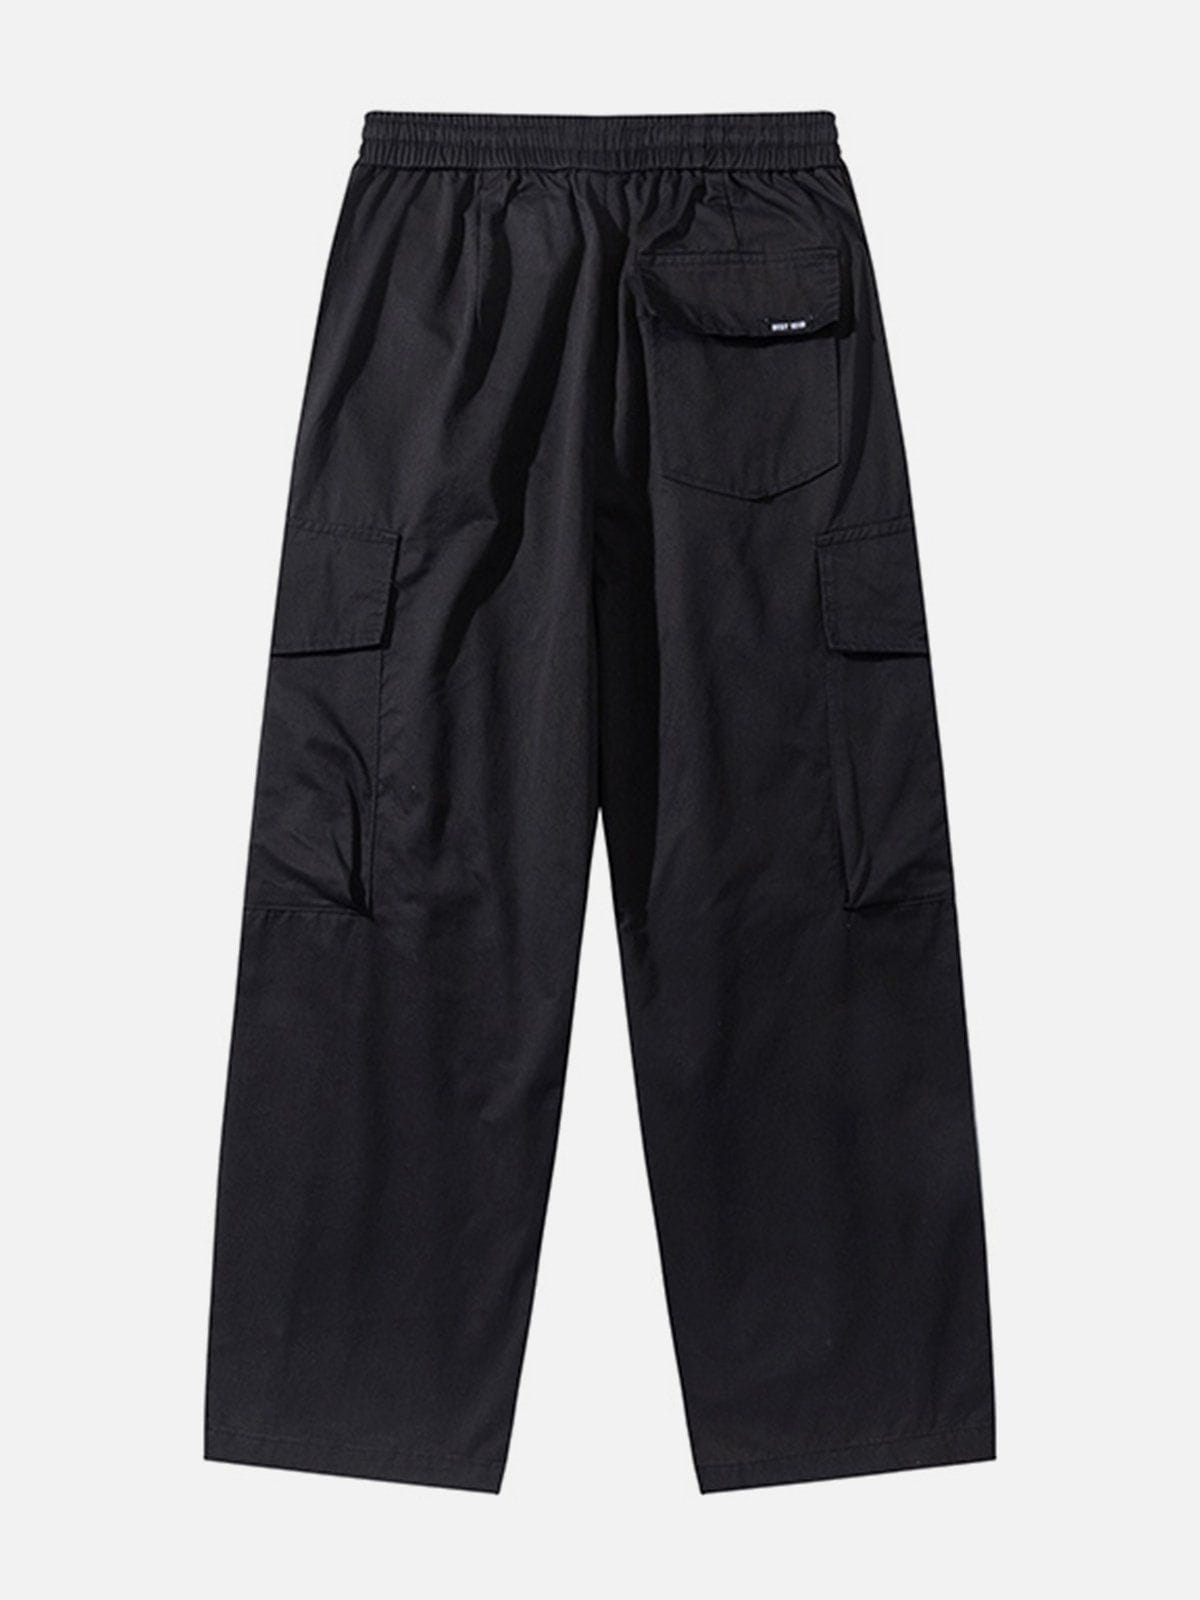 Eprezzy® - Multi-Pocket Straight Cargo Pants Streetwear Fashion - eprezzy.com